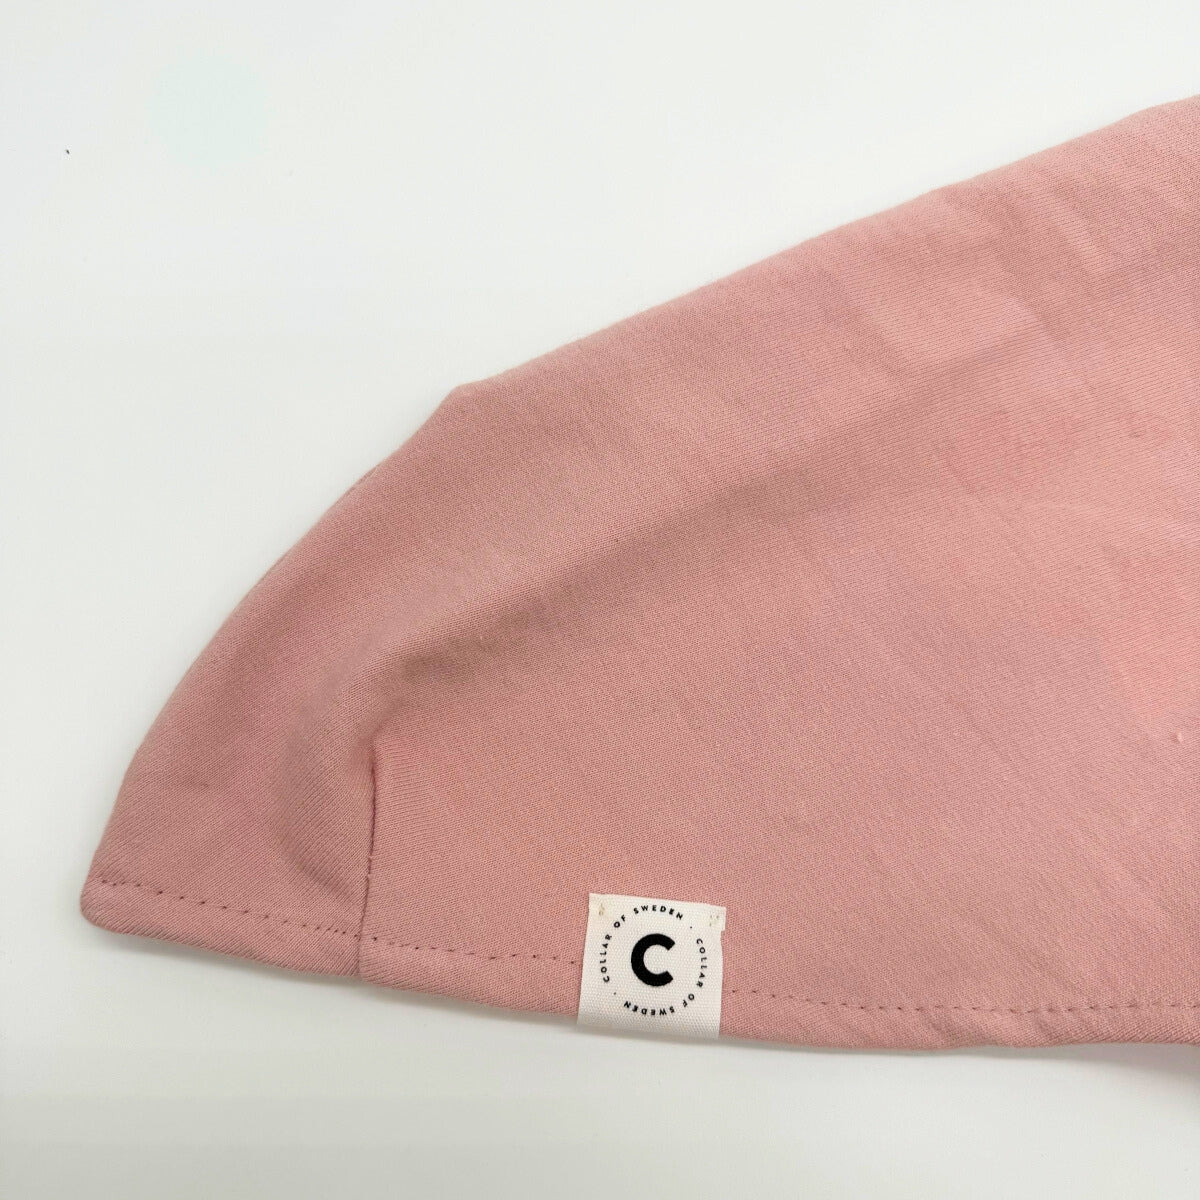 italian-greyhound-sweater-pastel-pink-sweatshirt-detail_f504e28e-675d-46f8-b06c-7dafa3421fcb.jpg